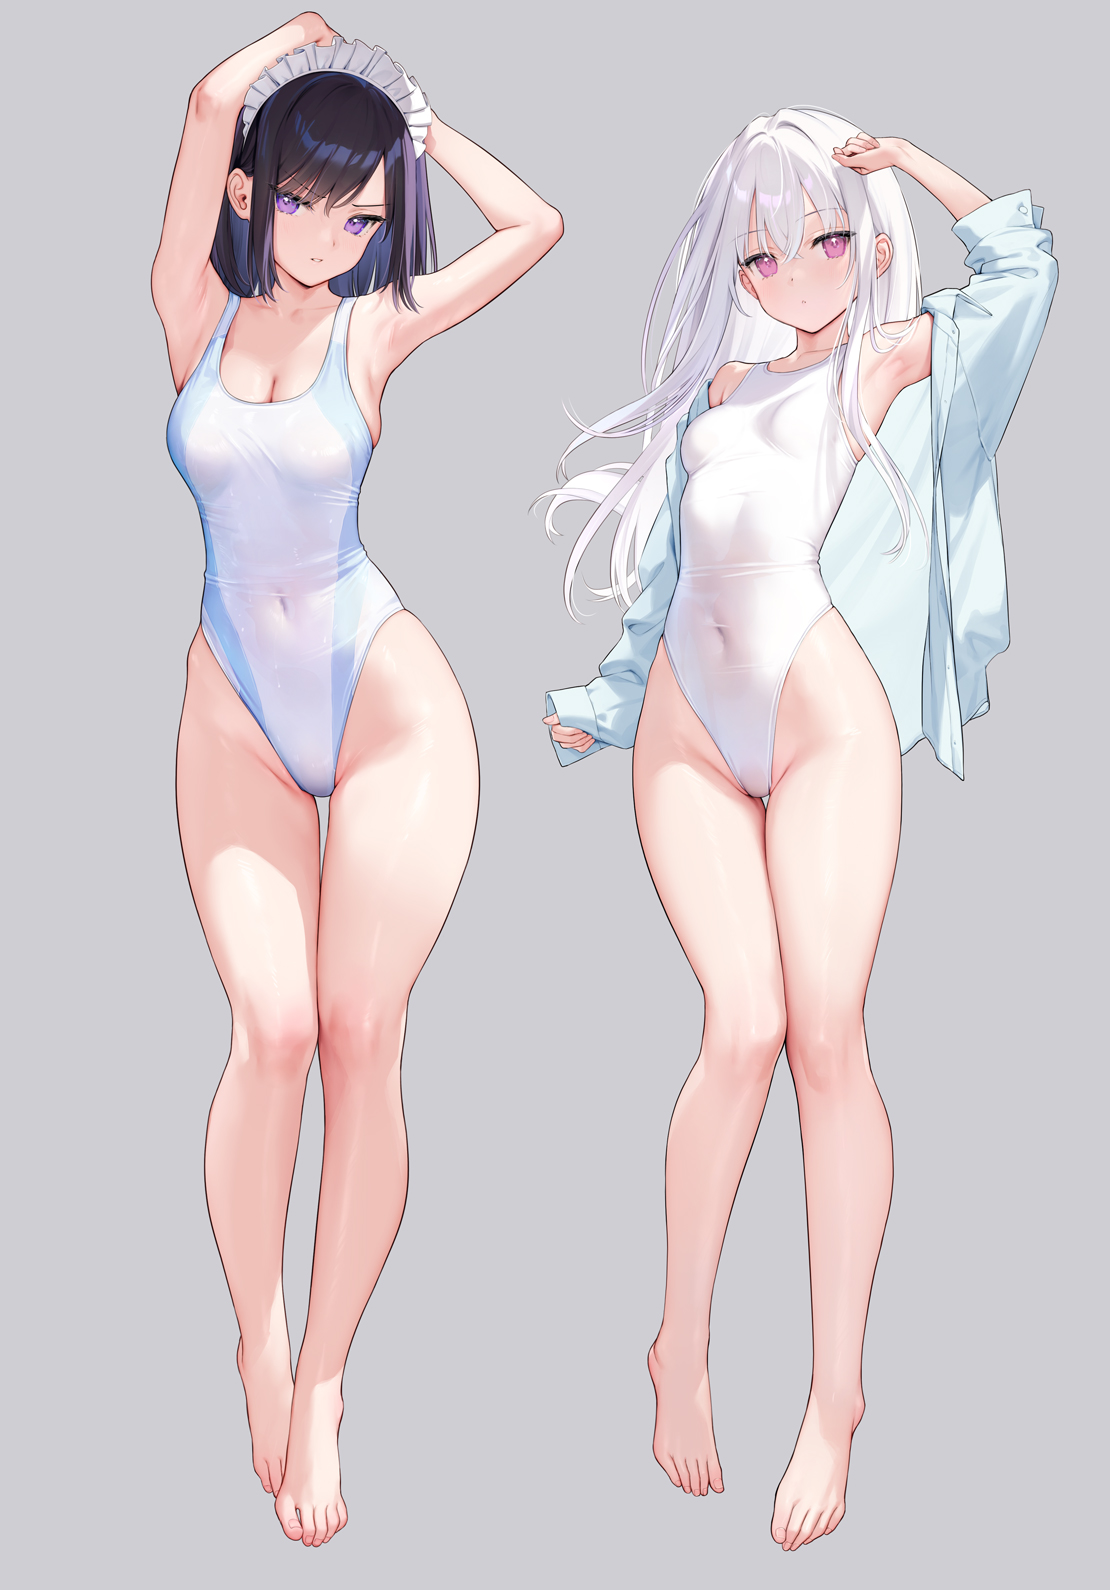 Anime 1110x1590 boobs black hair portrait display swimwear feet armpits Mignon (artist)